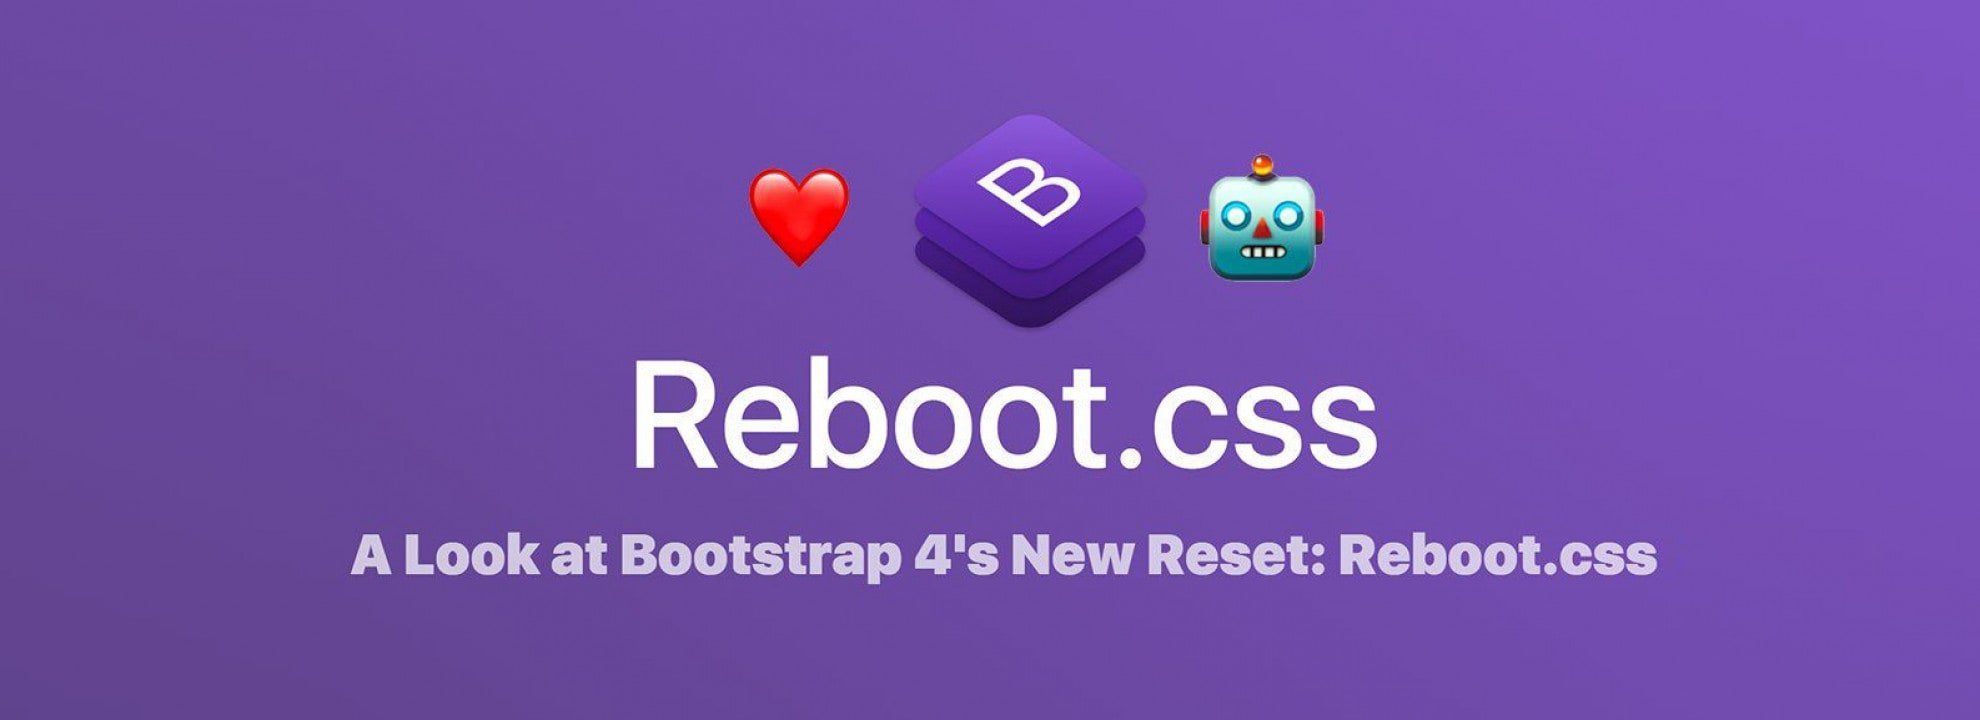 Reboot.CSS banner